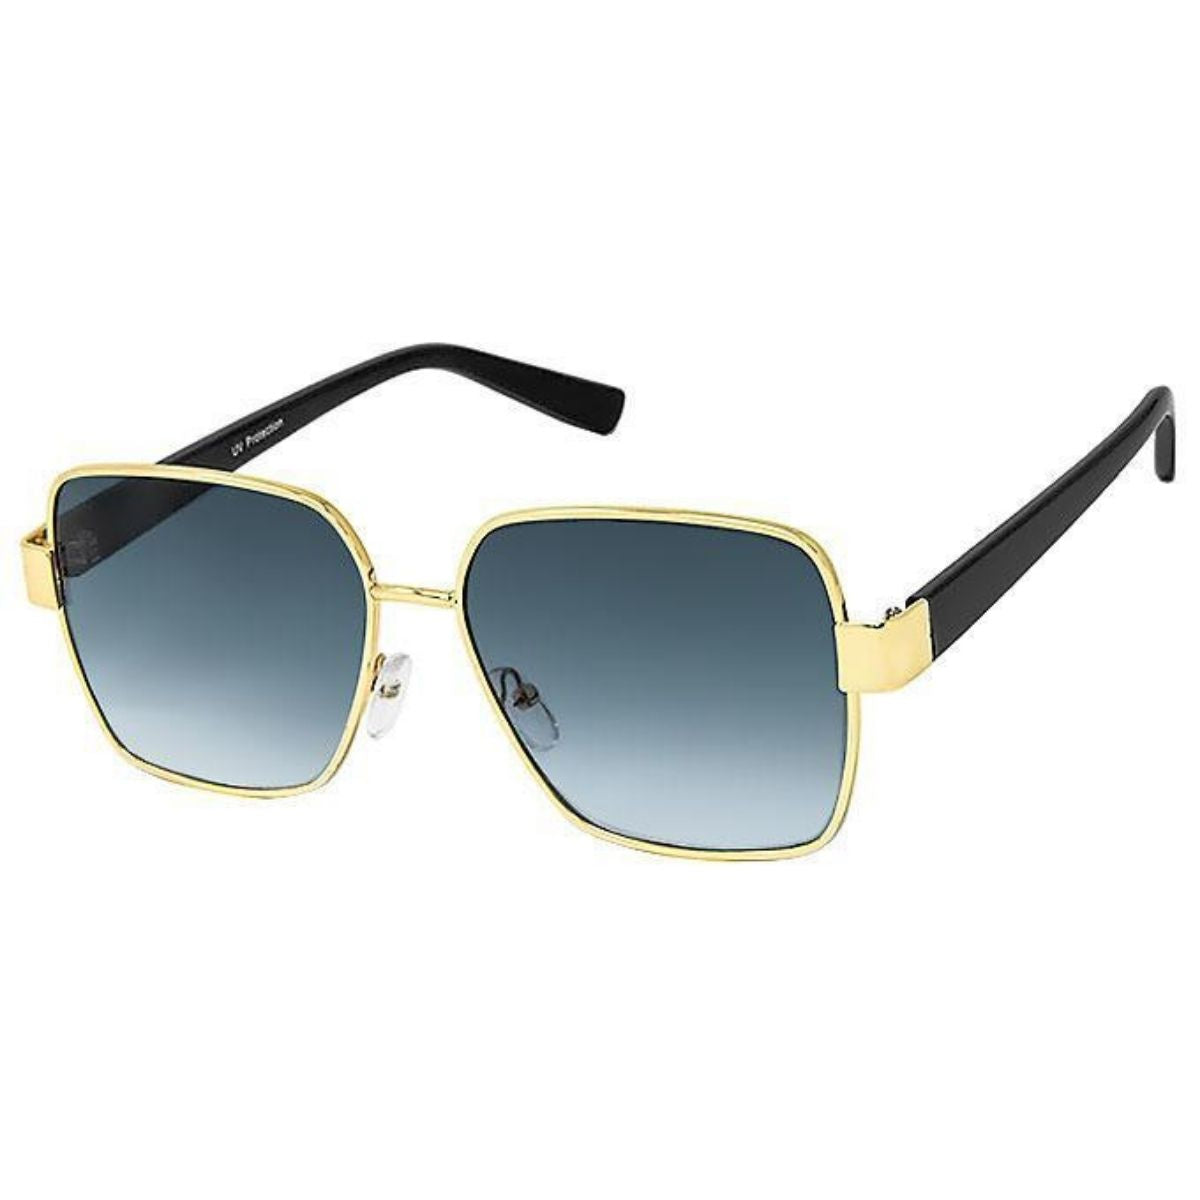 Black Lens Gold Wire Frame Sunglasses